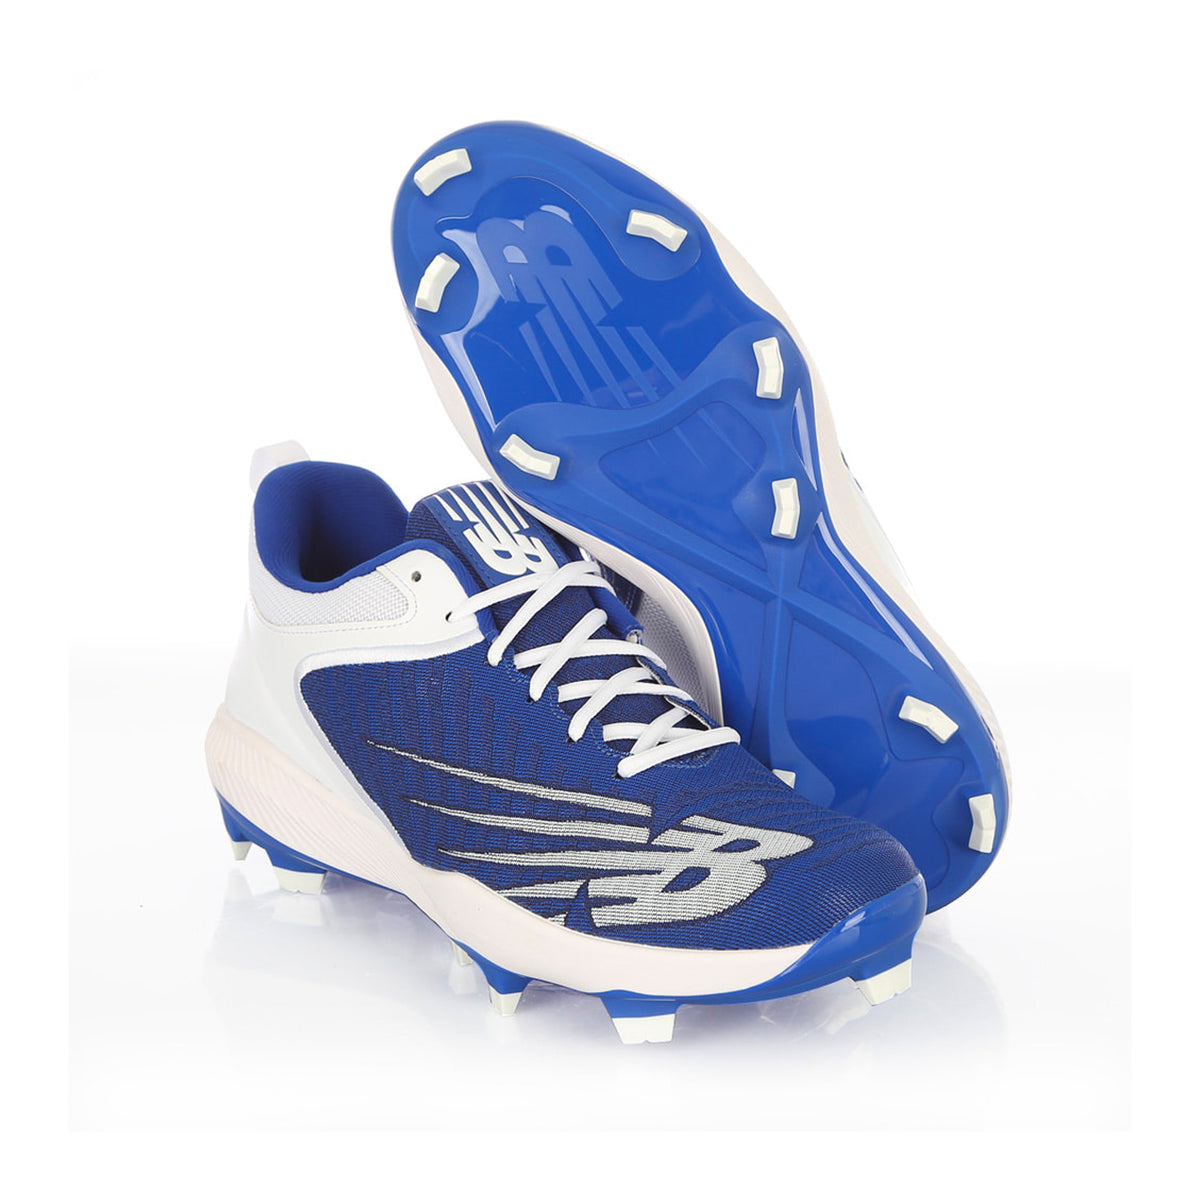 Zapatillas Atletismo Clavos Hombre New Balance MD500v6 Spike Blanca/Azul